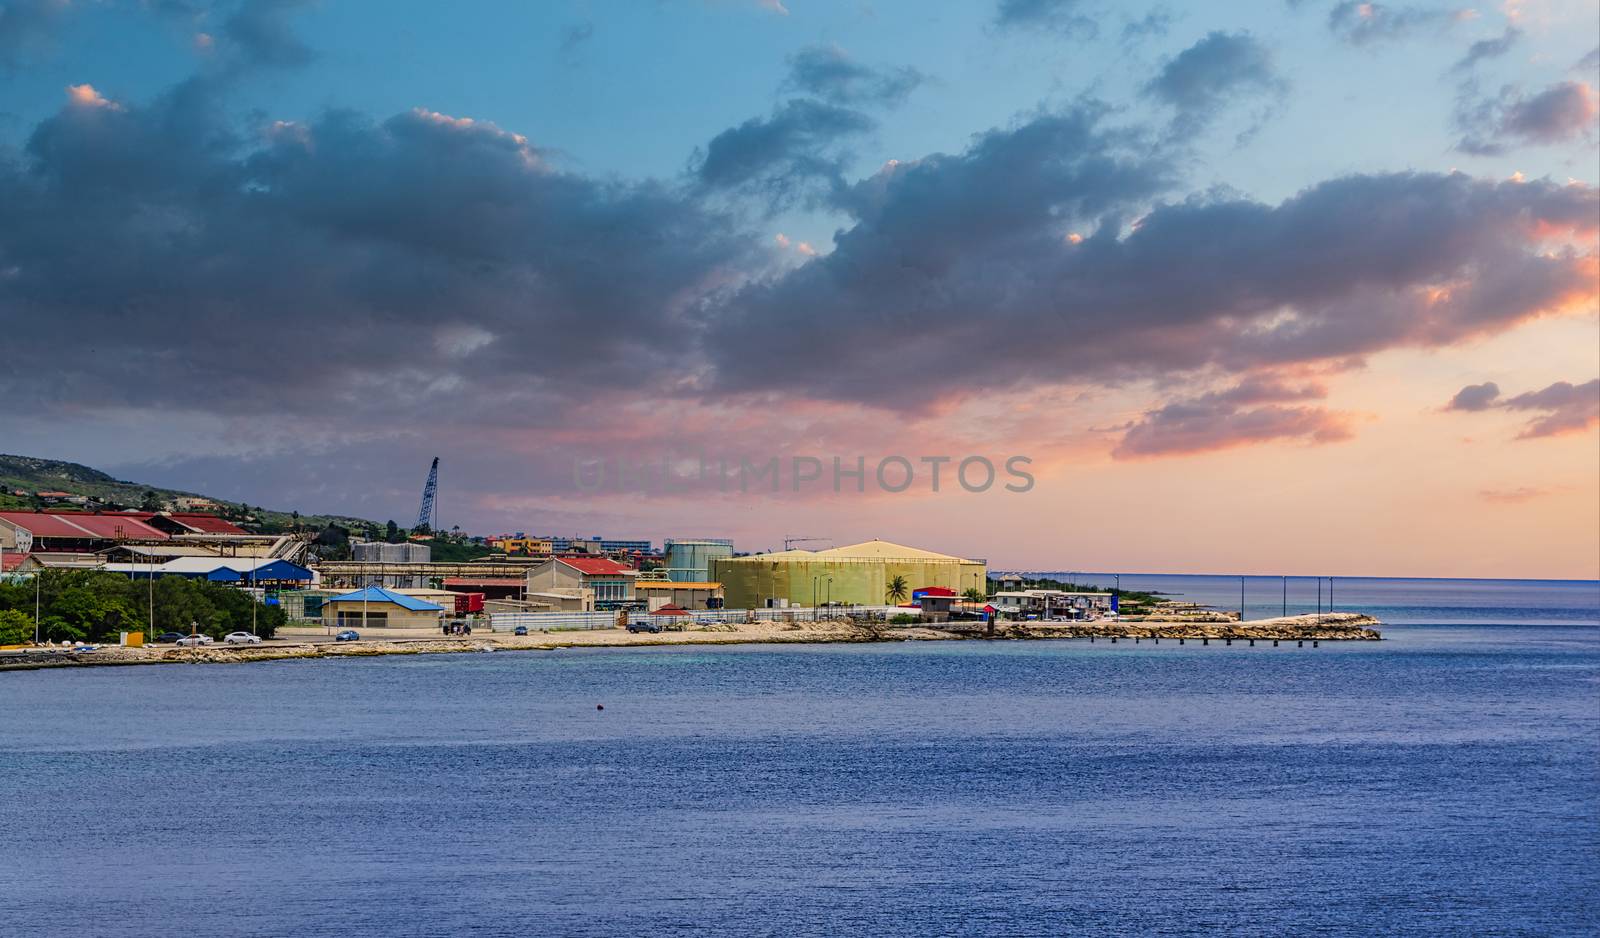 Heavy Industry on Curacao at Dusk by dbvirago